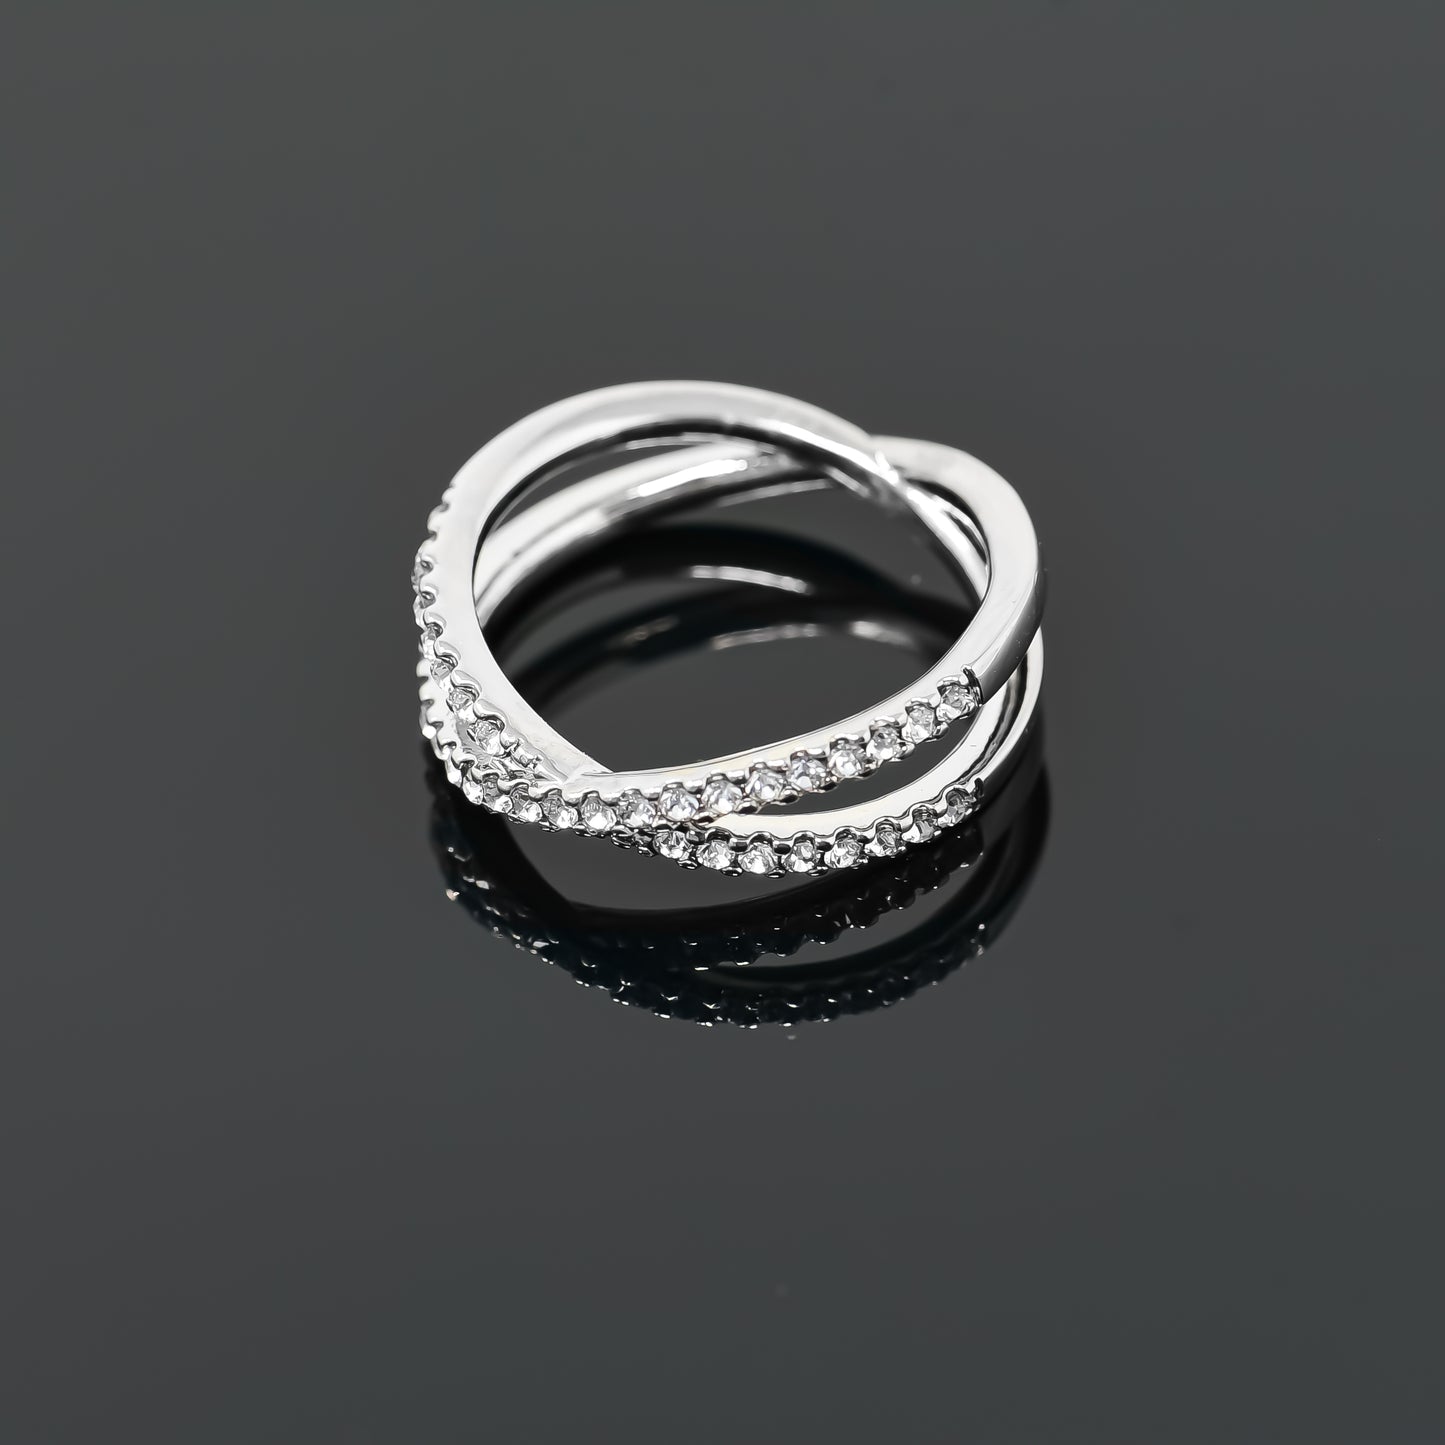 "Present" Ring